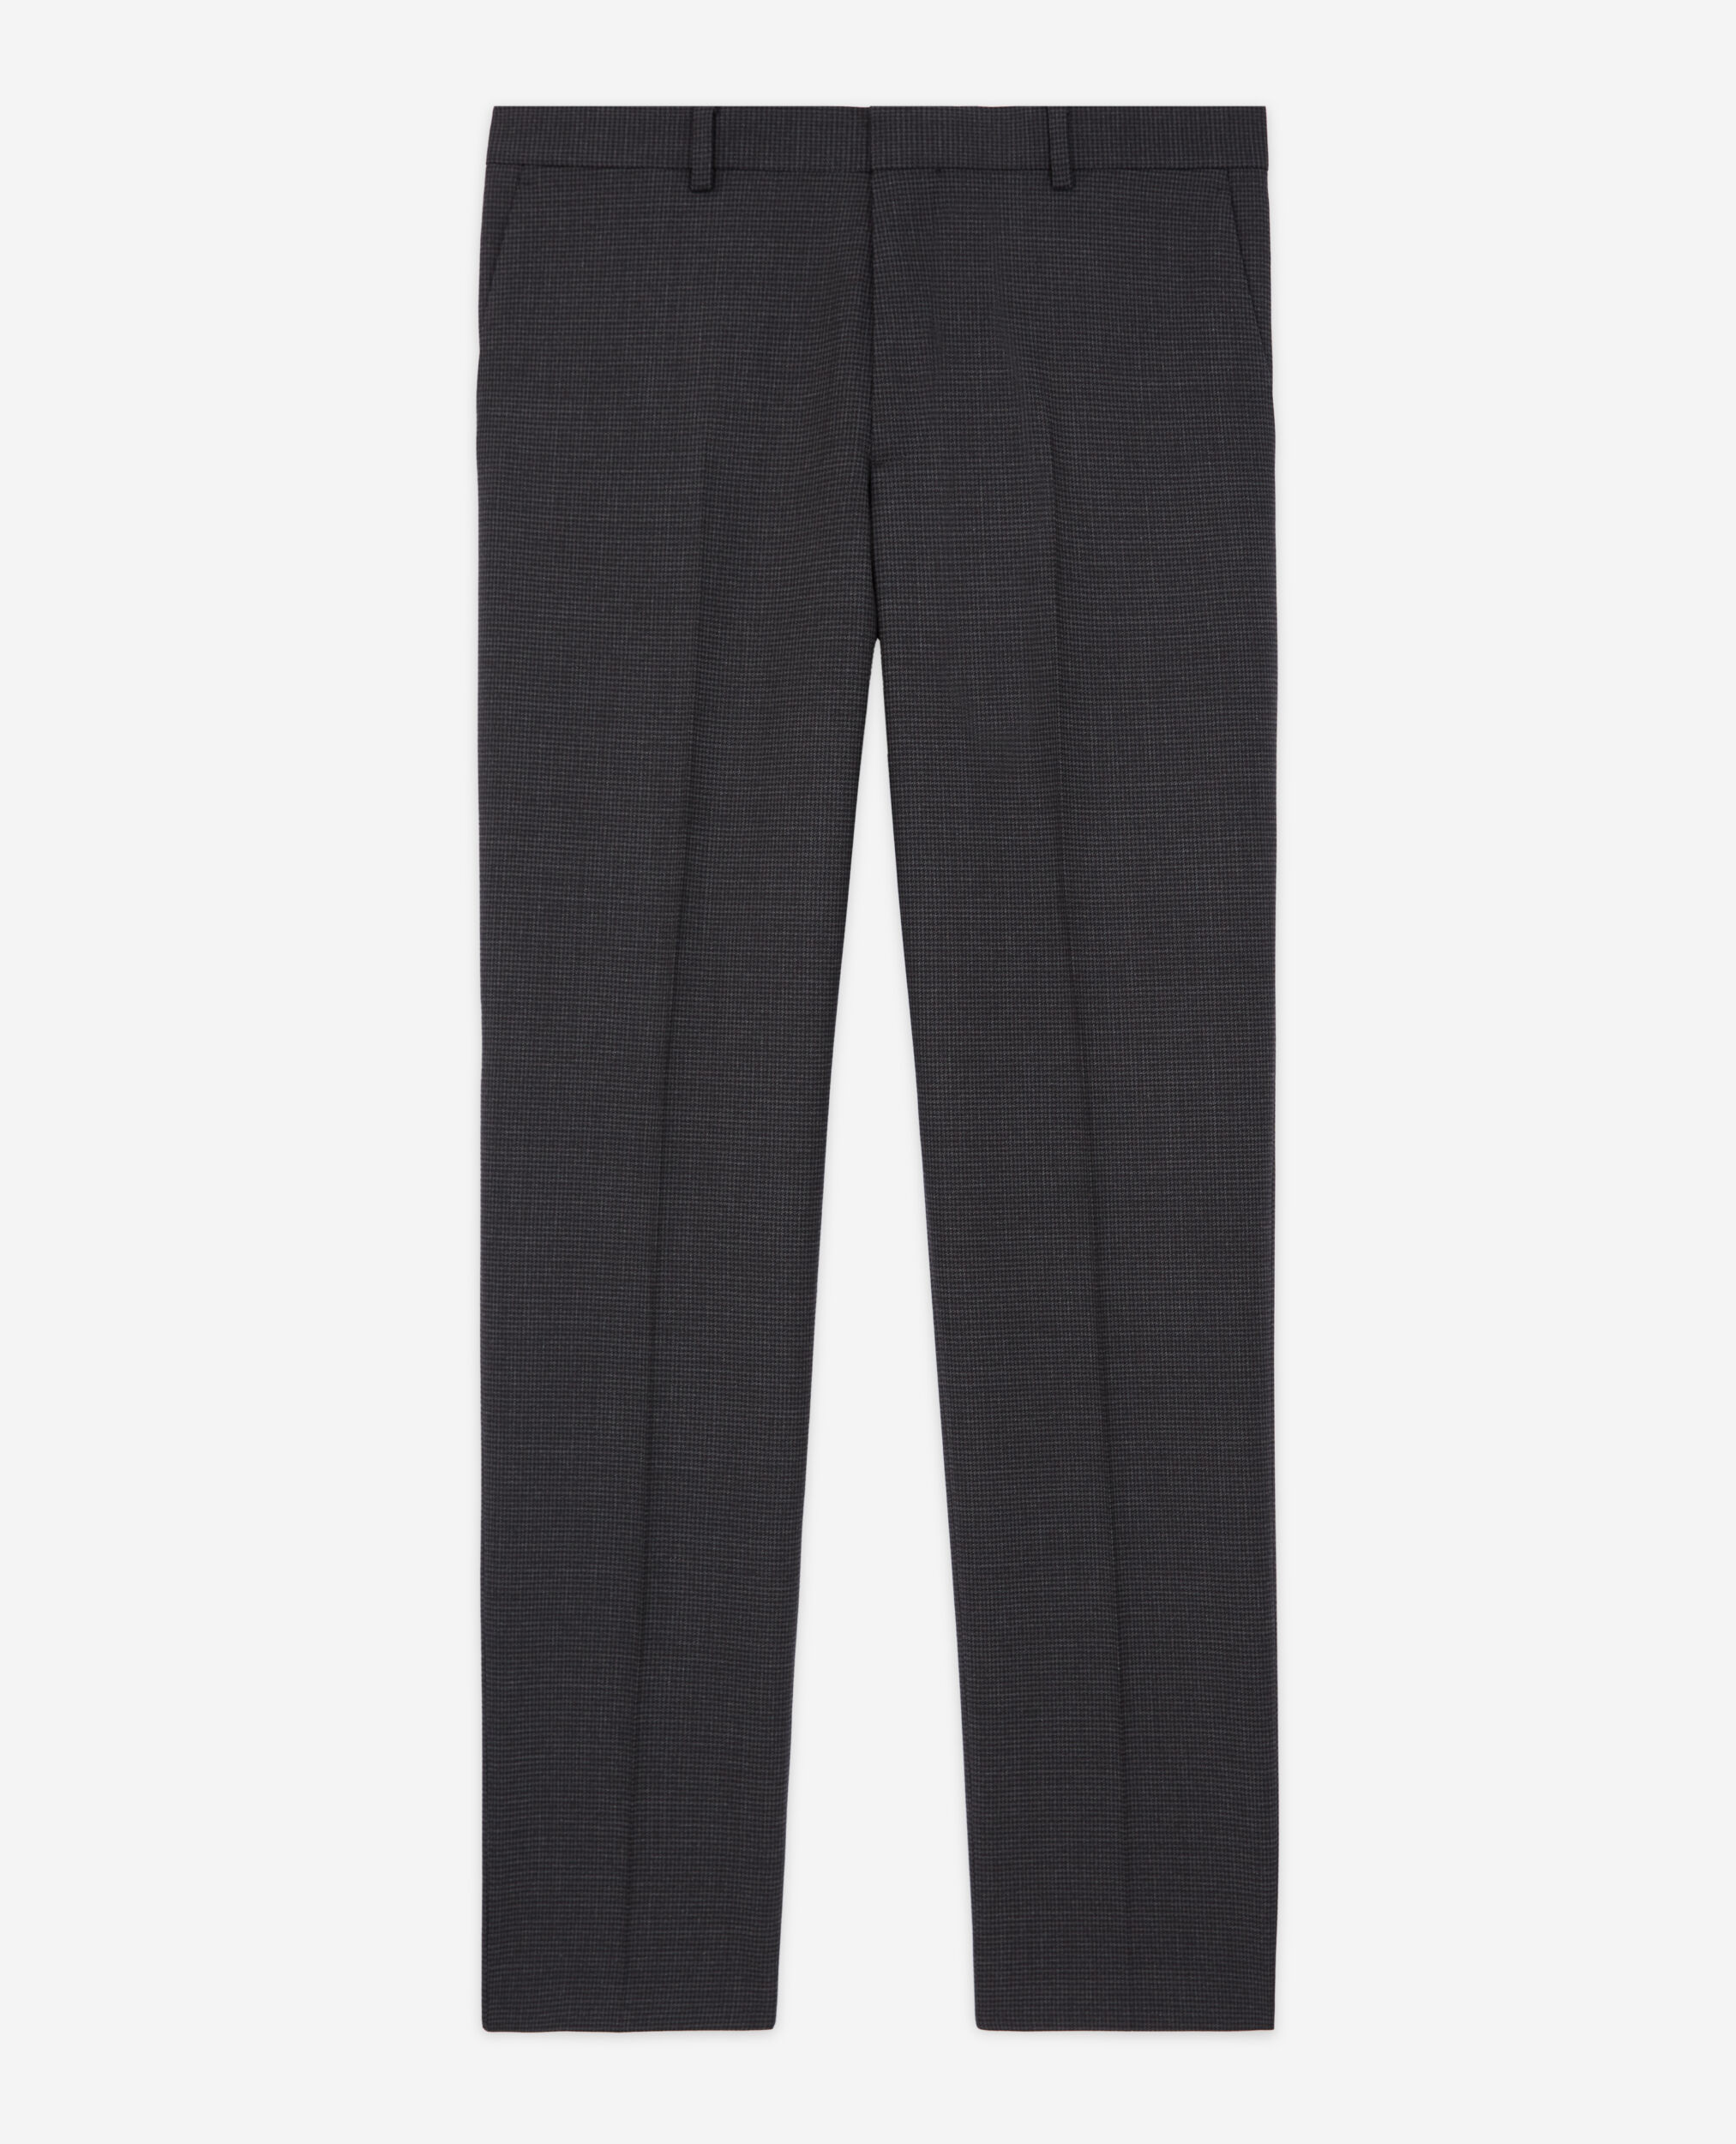 Houndstooth wool suit pants, BLACK GREY, hi-res image number null